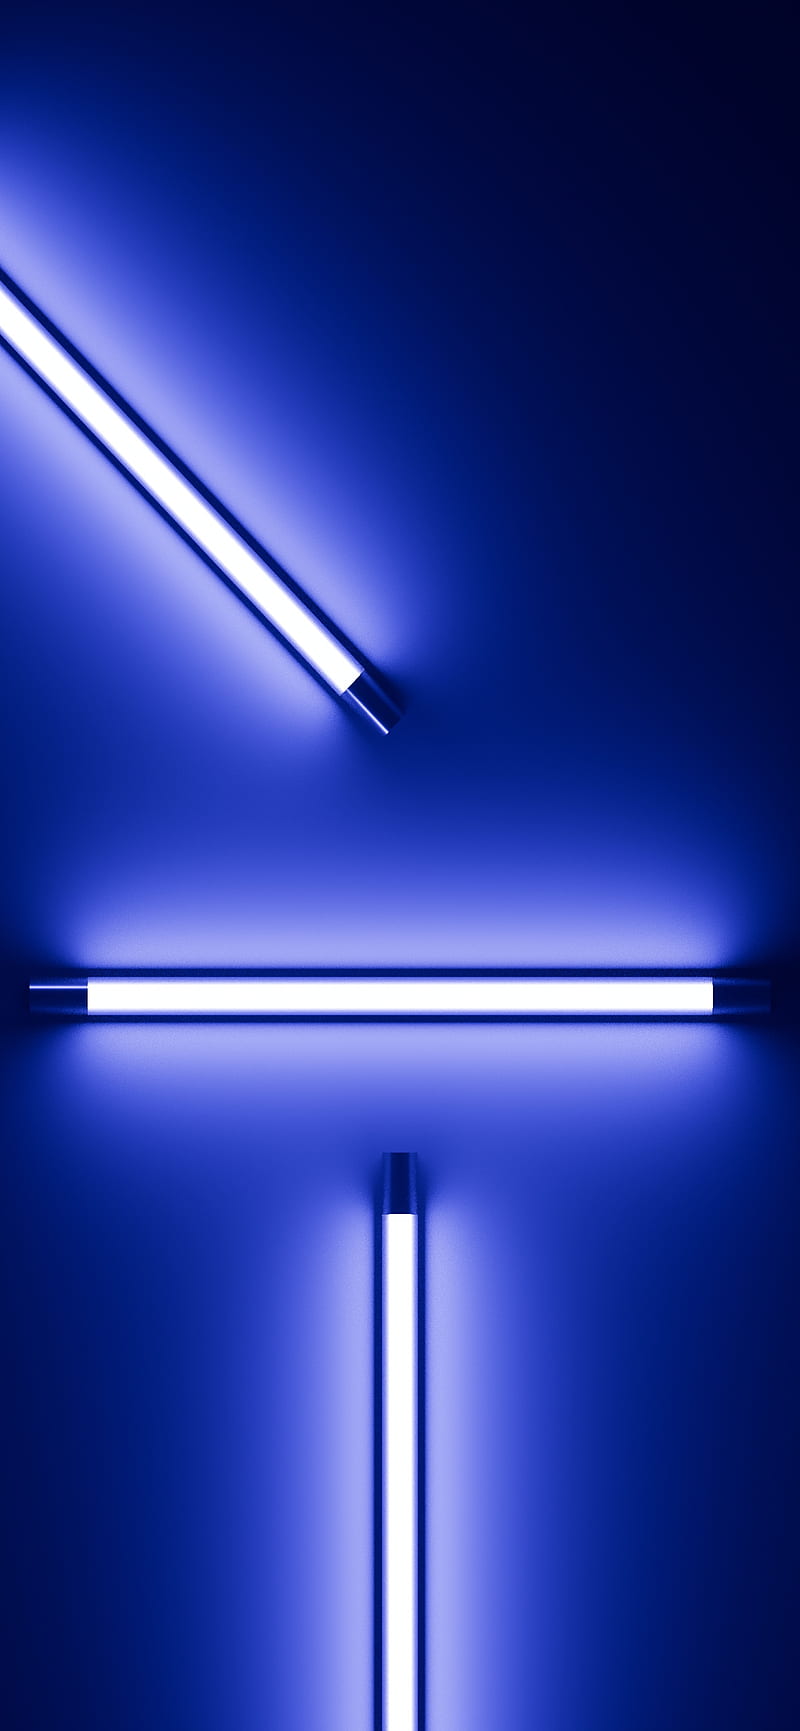 HD wallpaper: blue life line wallpaper, lines, minimalism, studio shot,  illuminated | Wallpaper Flare